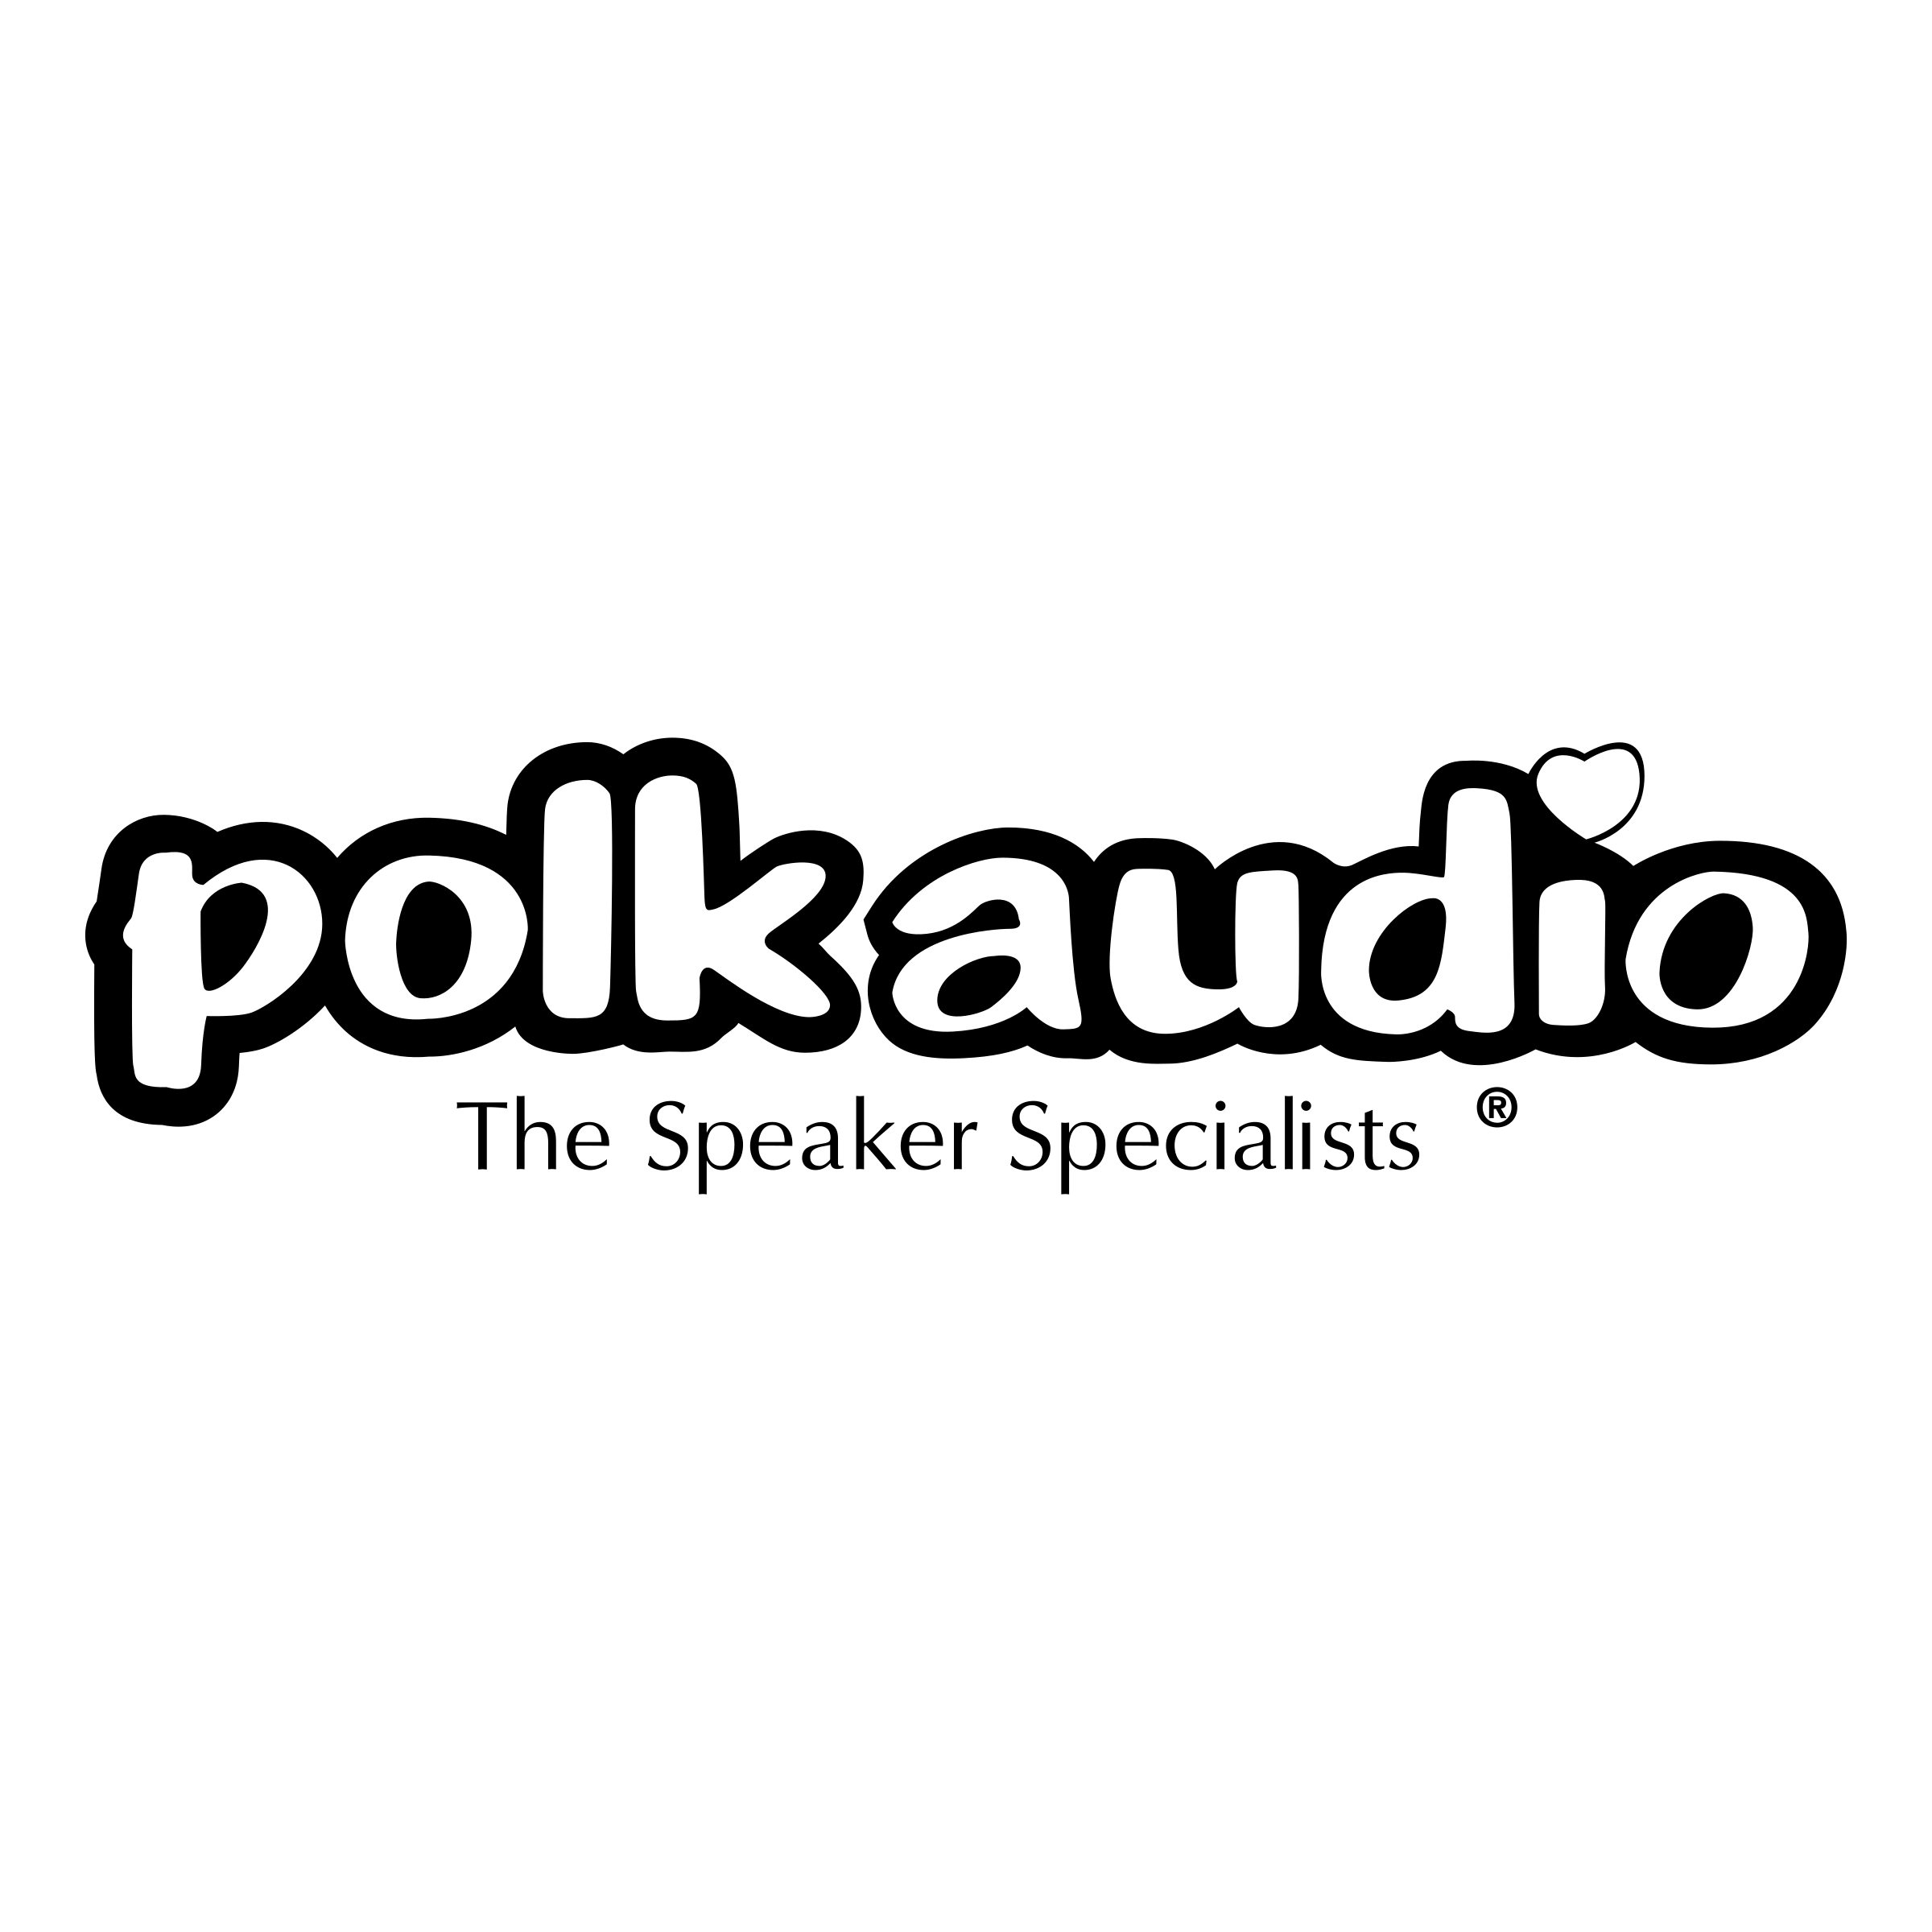 Polk Logo - Polk Audio Logo PNG Transparent & SVG Vector - Freebie Supply